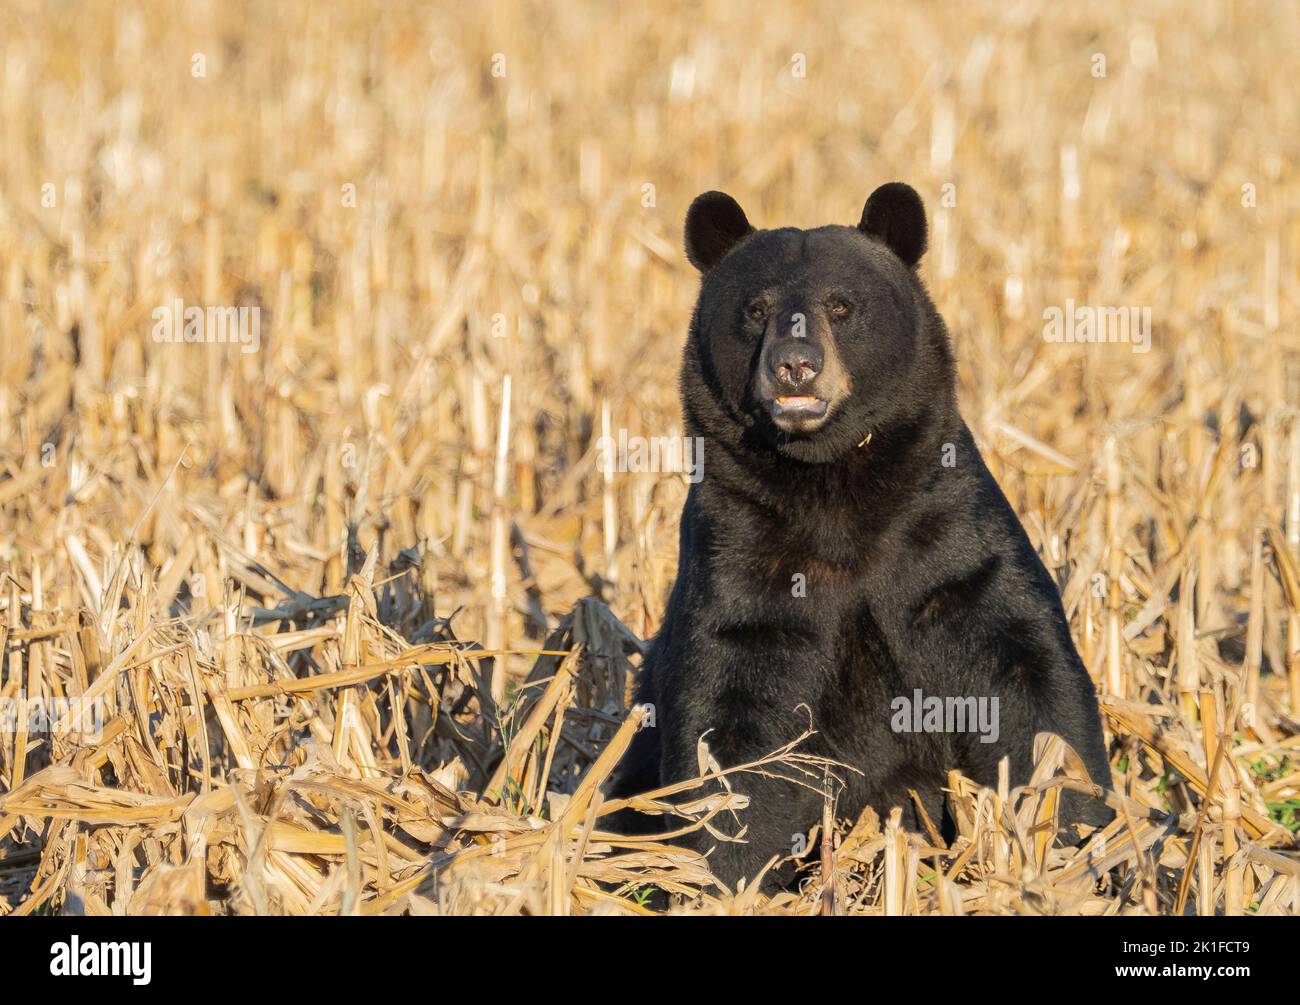 American Black Bear (Ursus americanus)  sitting in a cornfield Stock Photo